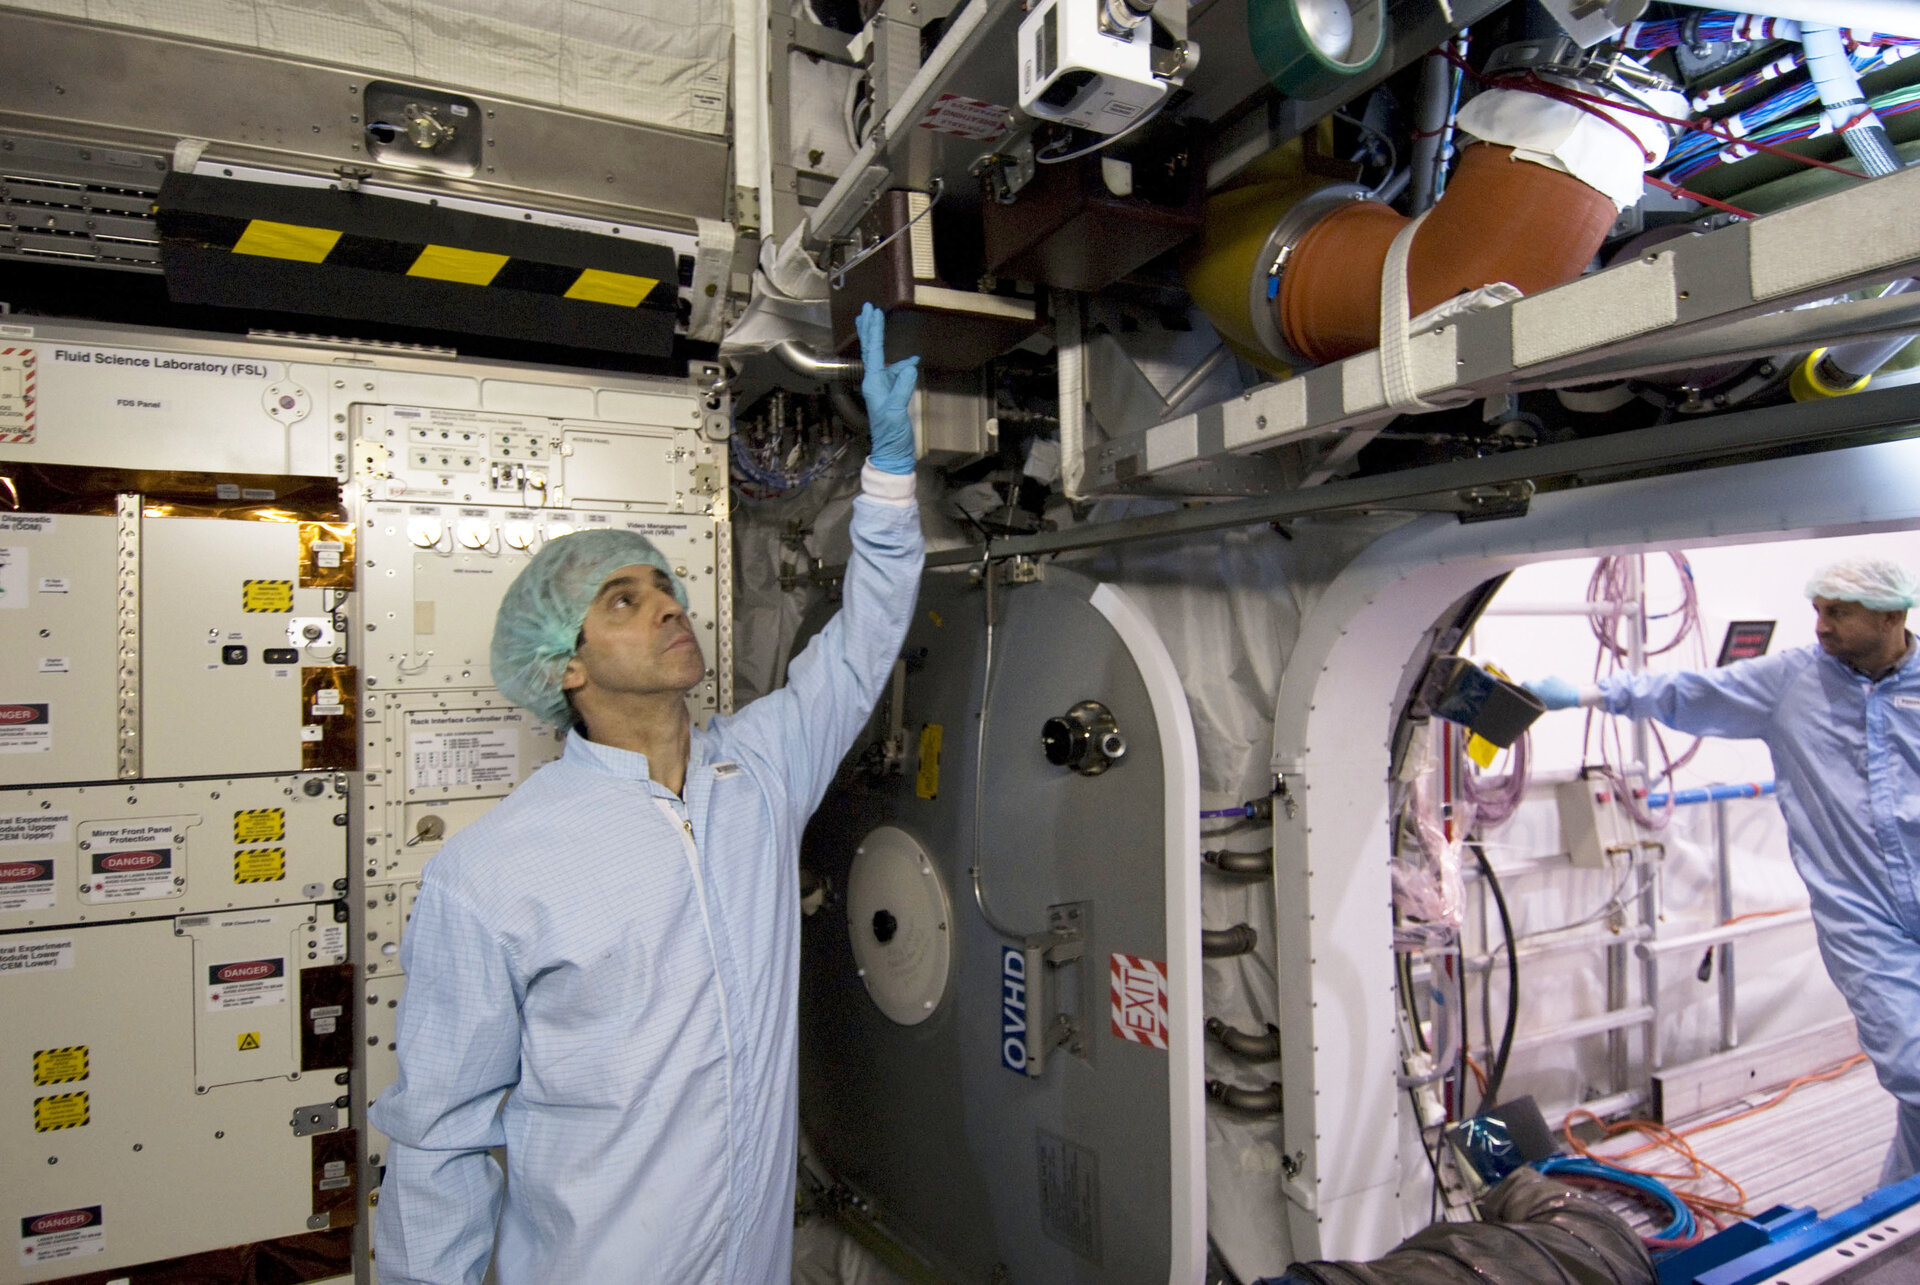 ESA astronaut Leopold Eyharts inspects the interior of the European Columbus laboratory